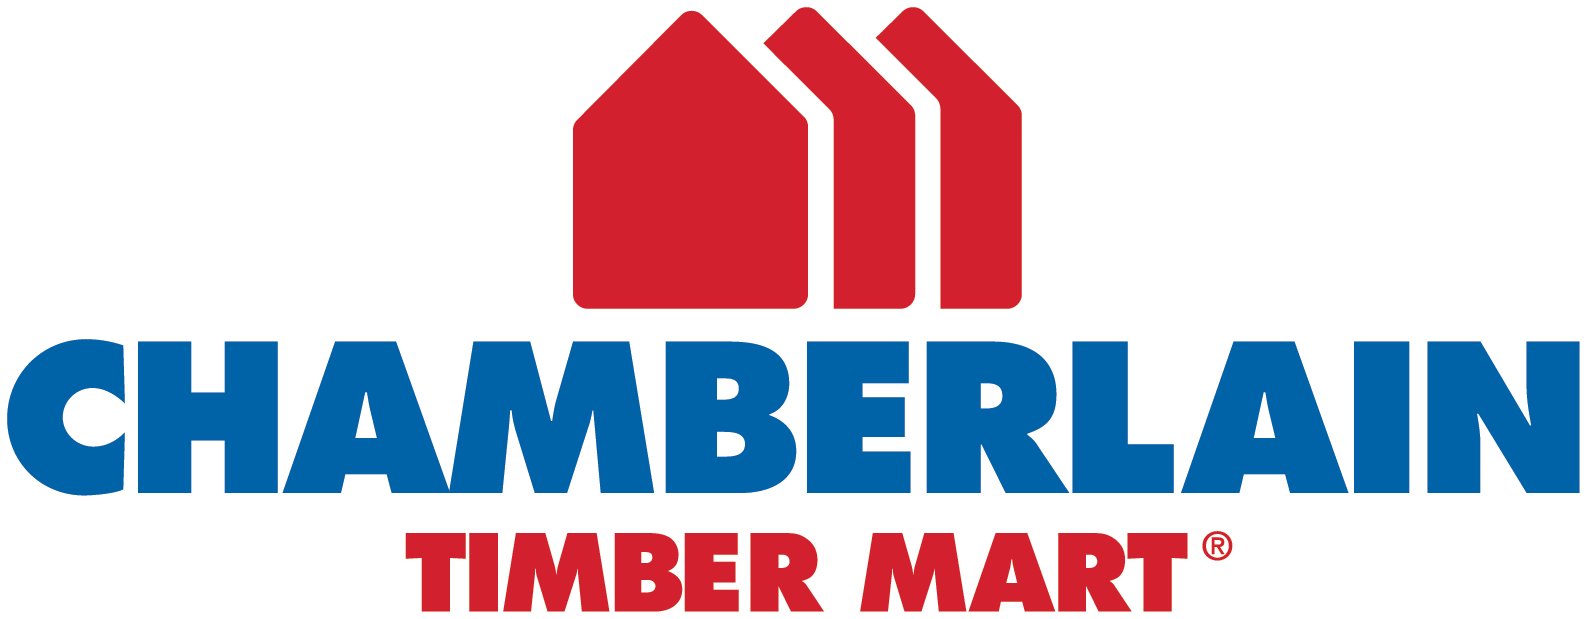 Chamberlain Timber Mart - Renovation & Building Materials in Muskoka Ontario Canada